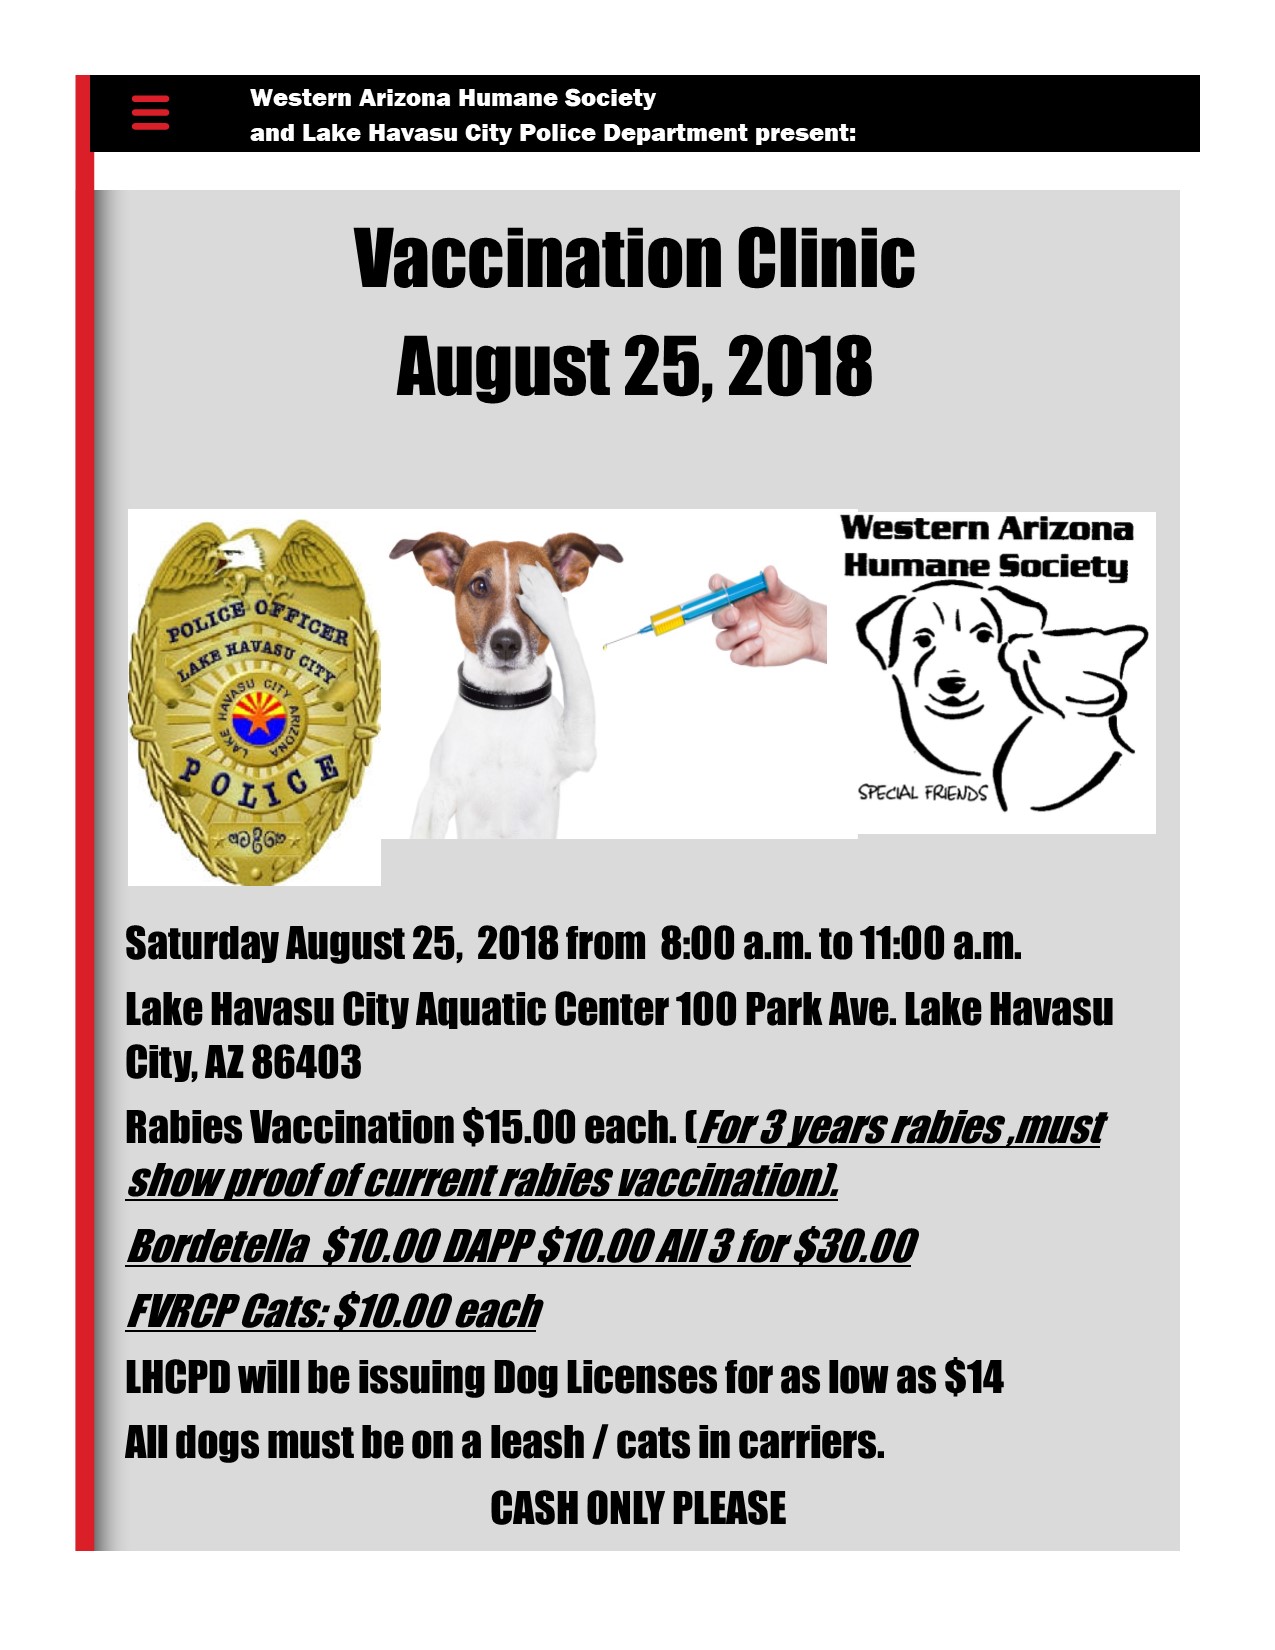 WAHS Vaccine Clinic